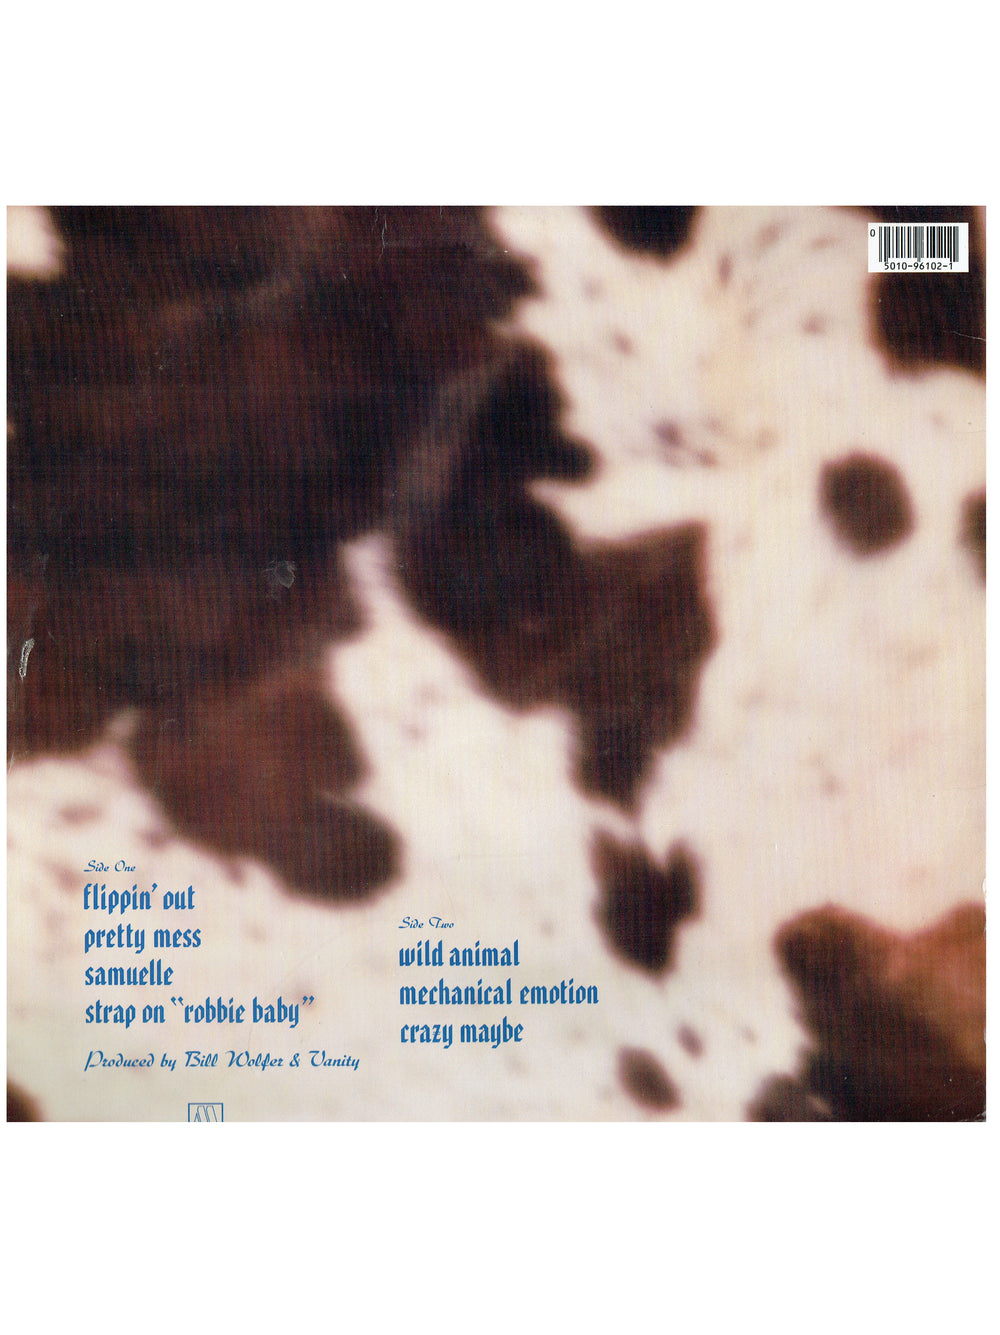 Prince – Vanity Wild Animal Vinyl Album 7 Tracks UK / EU Release 1984 Motown Prince